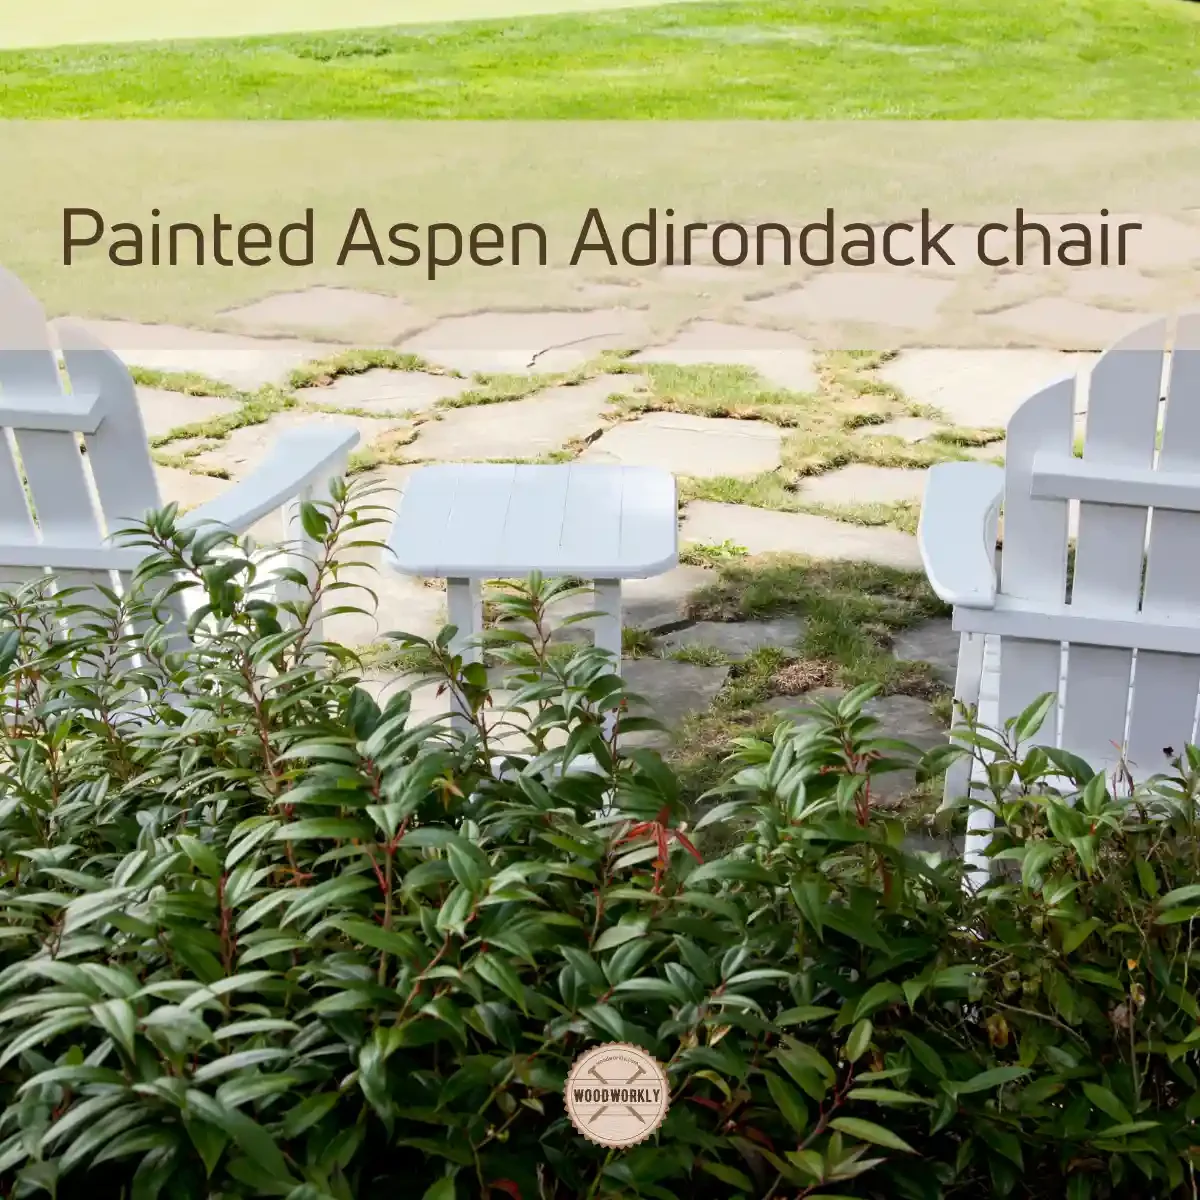 Painted Aspen Adirondack chair